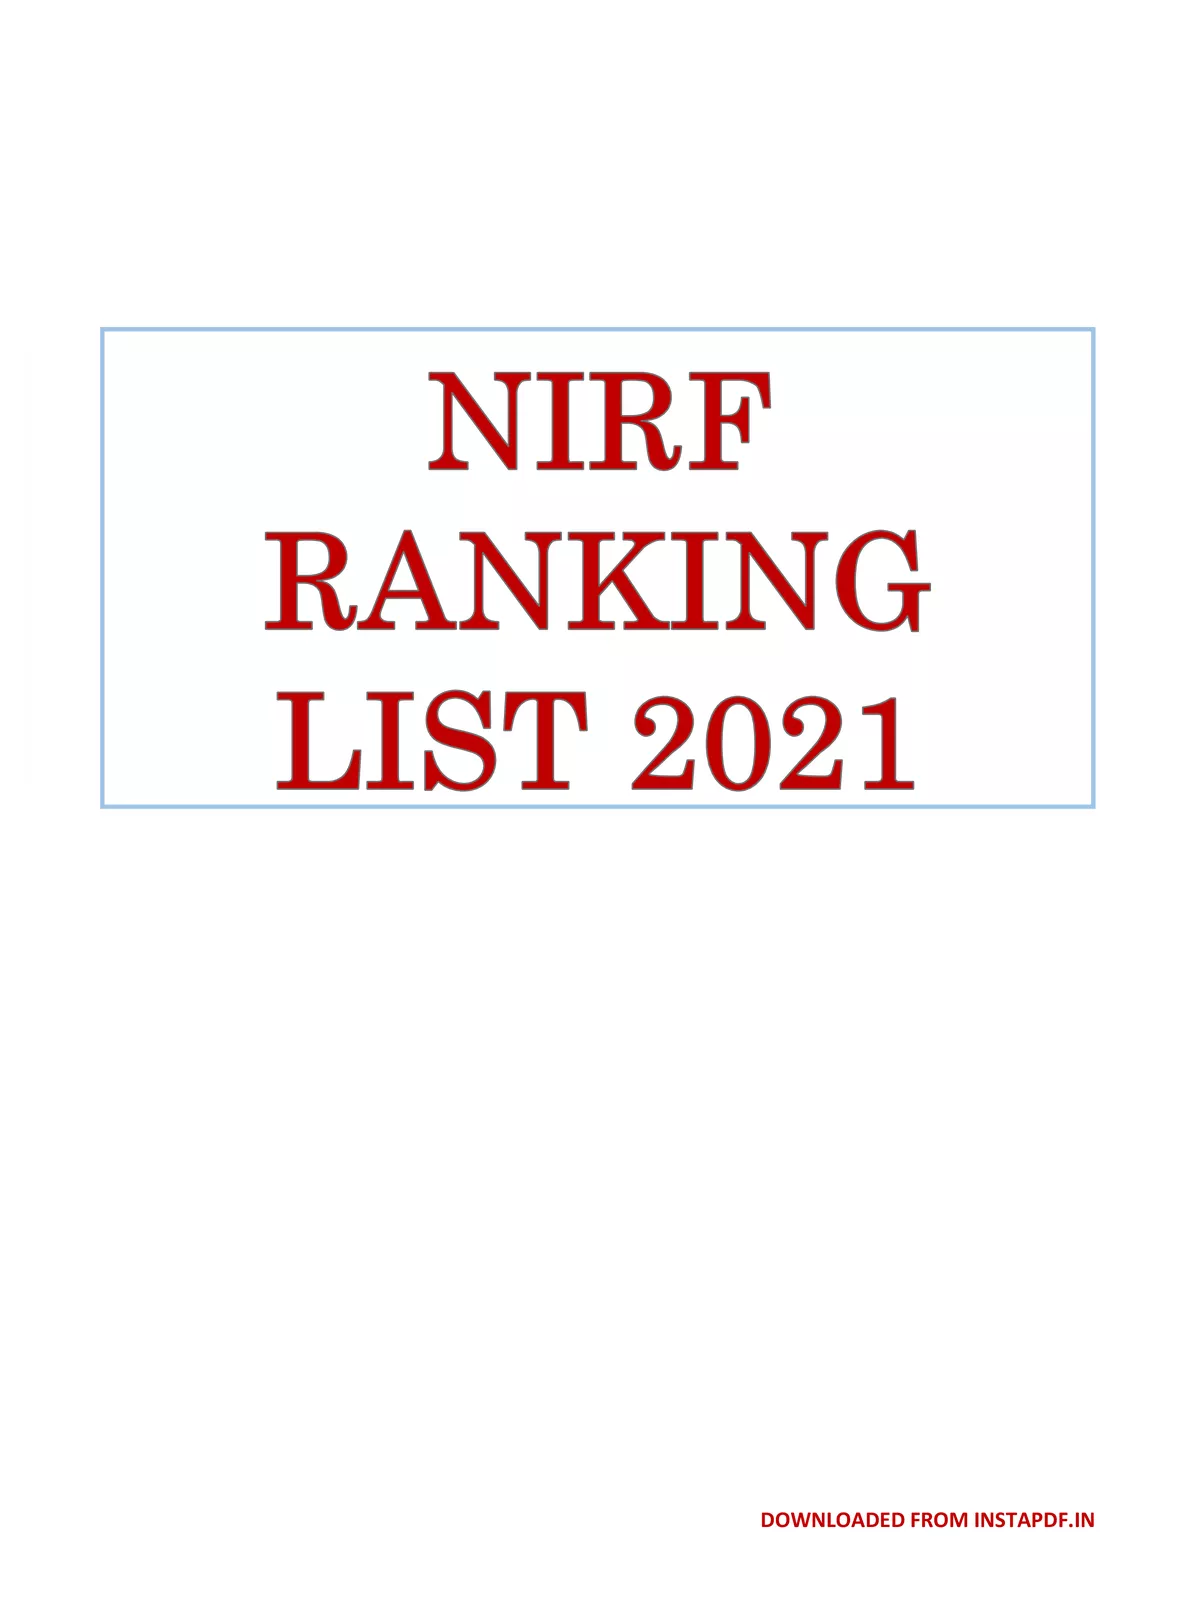 NIRF Ranking 2021 List